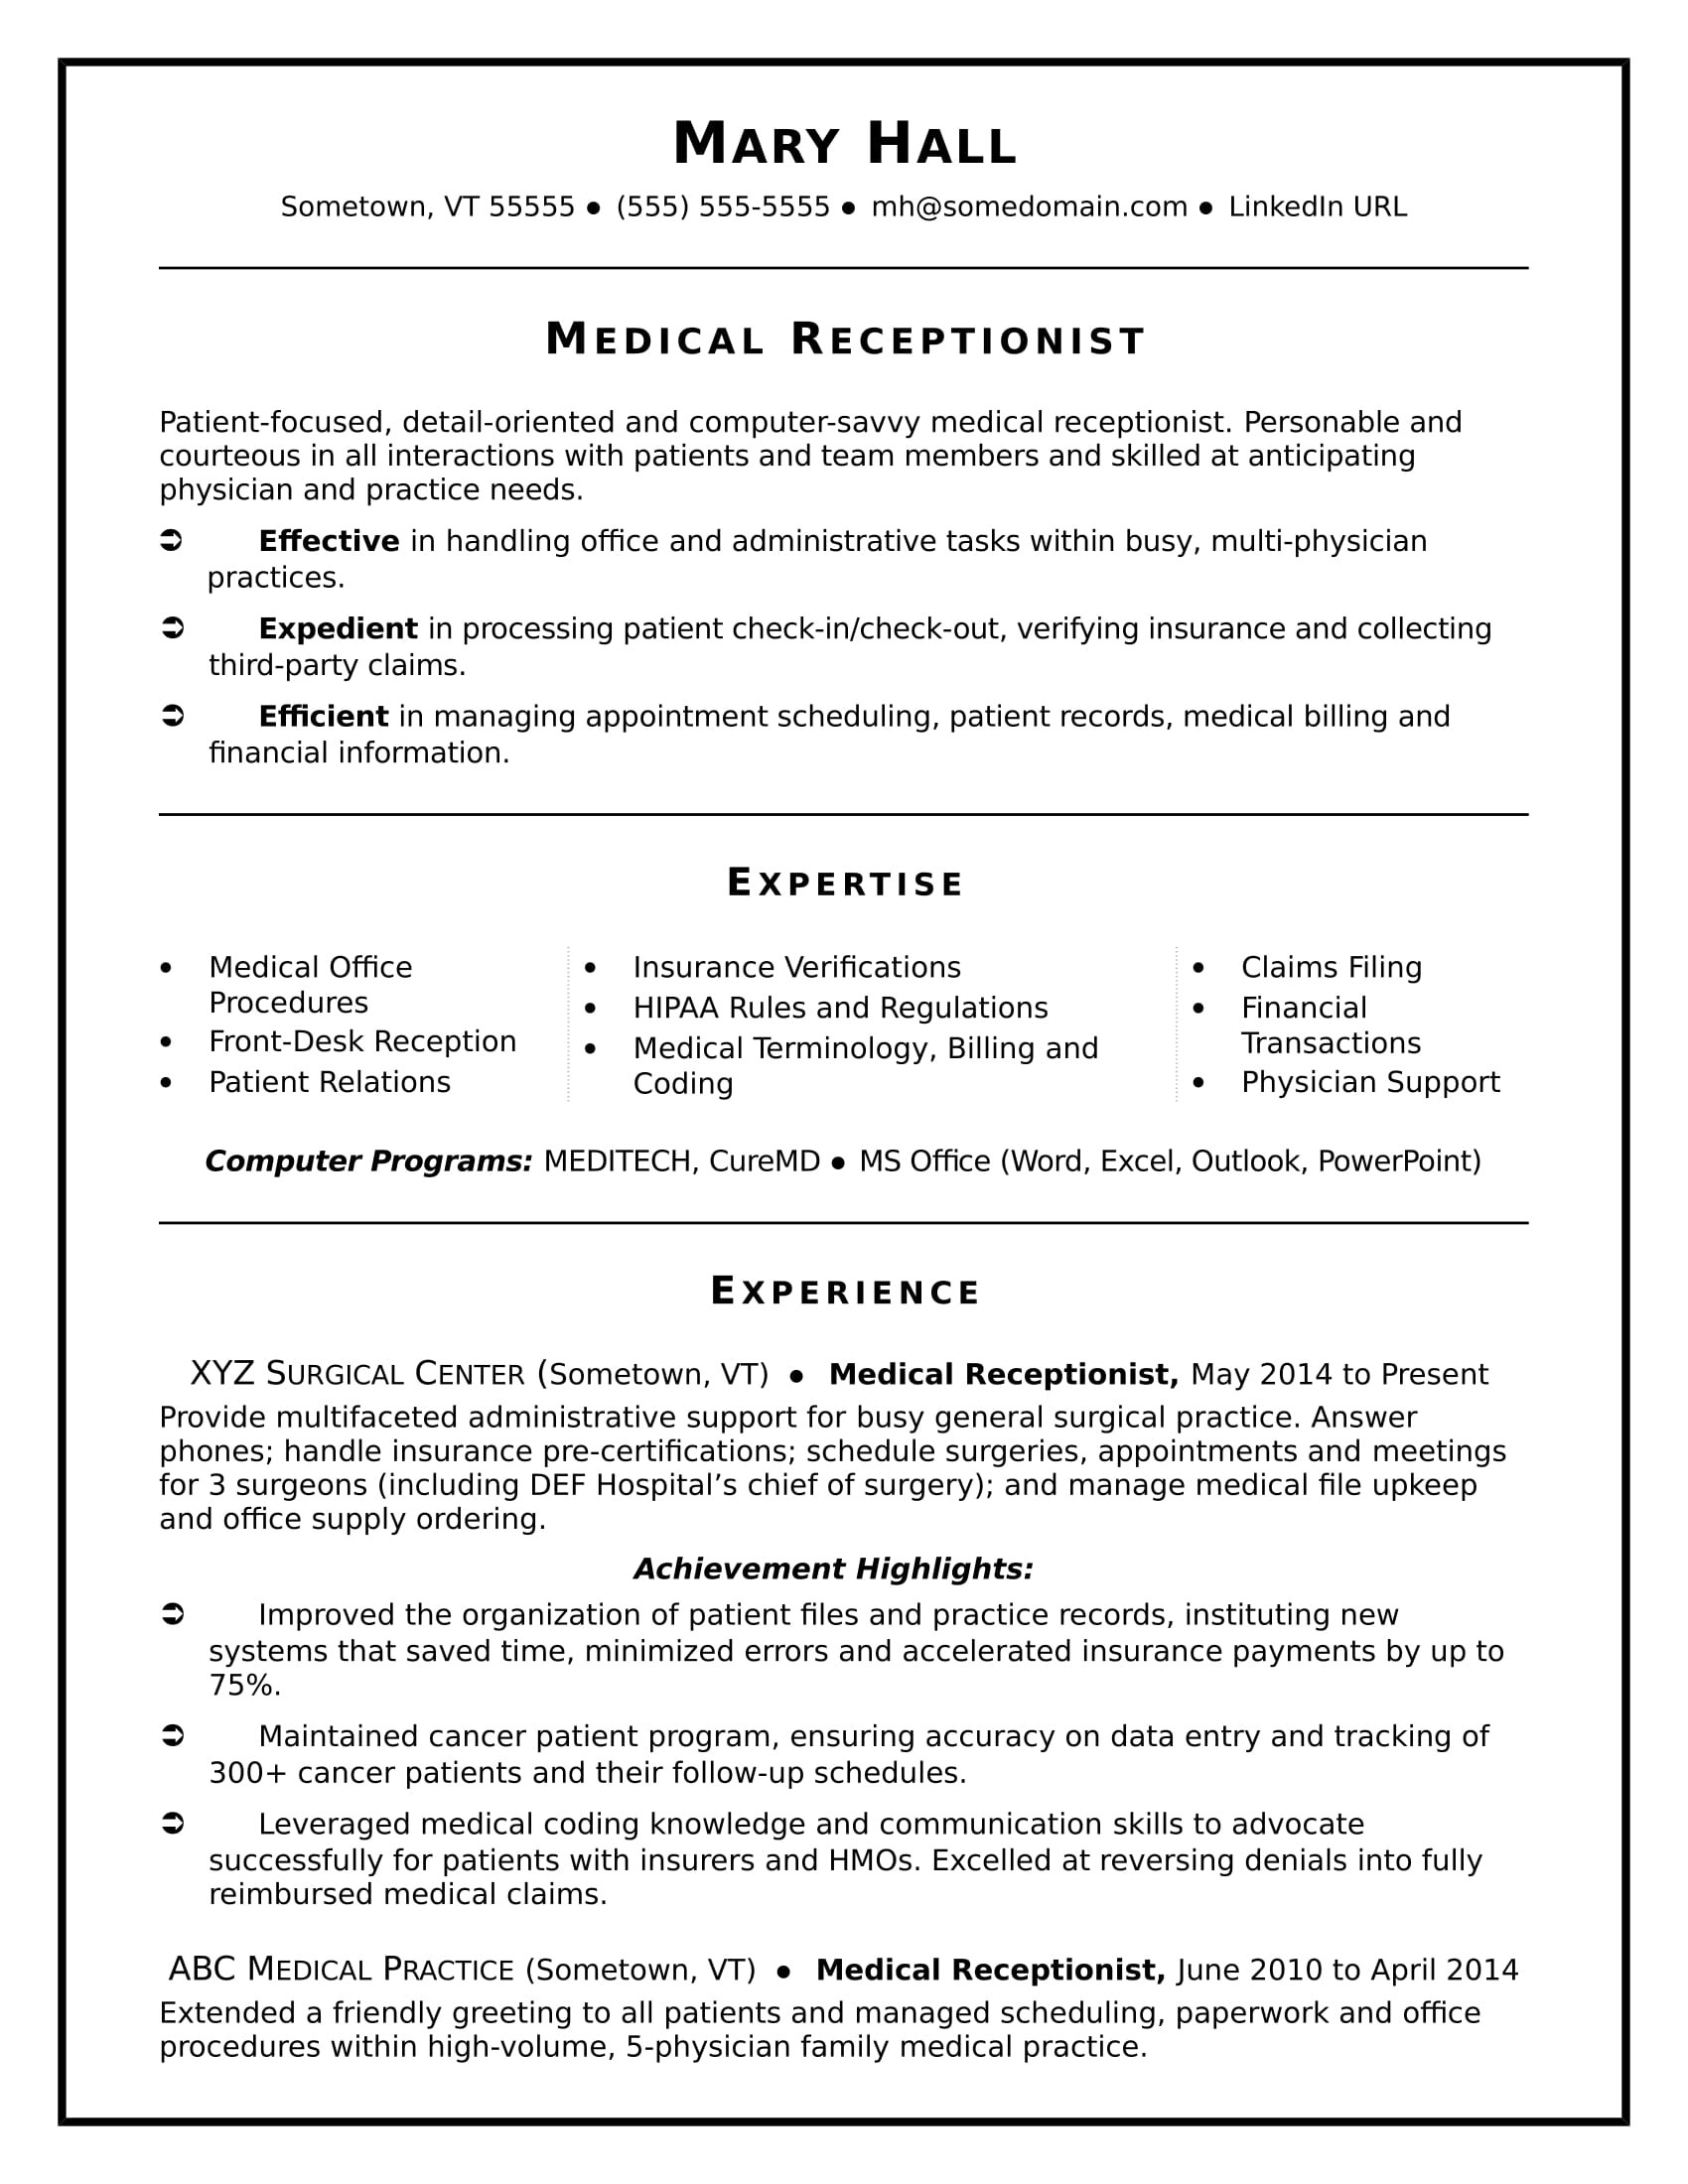 Outstanding Help Desk Resume Summary Sample Medical Receptionist Resume Sample Monster.com